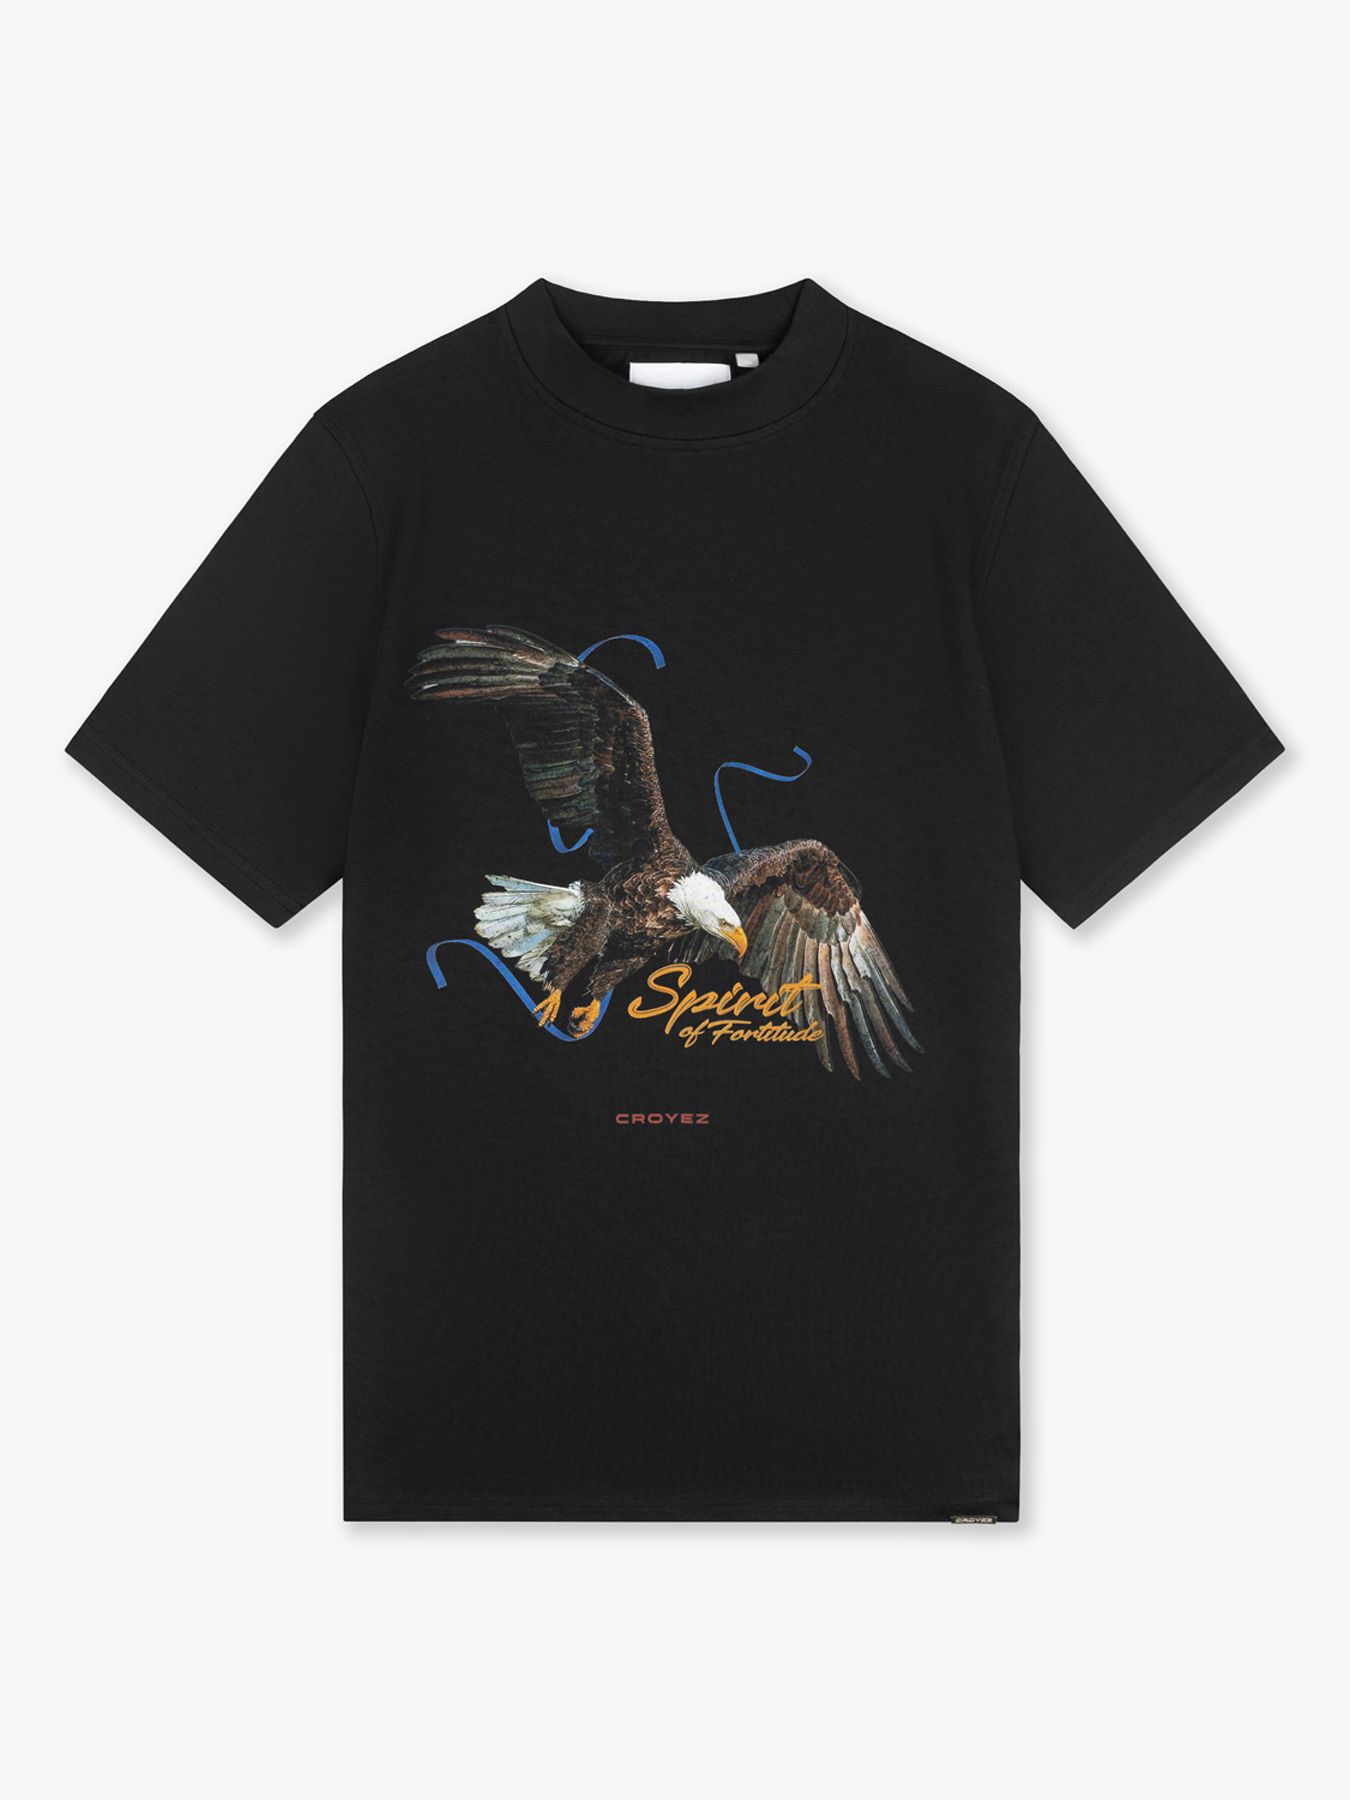 Croyez Spirit of Fortitude T-shirt Black 00105029-BLC